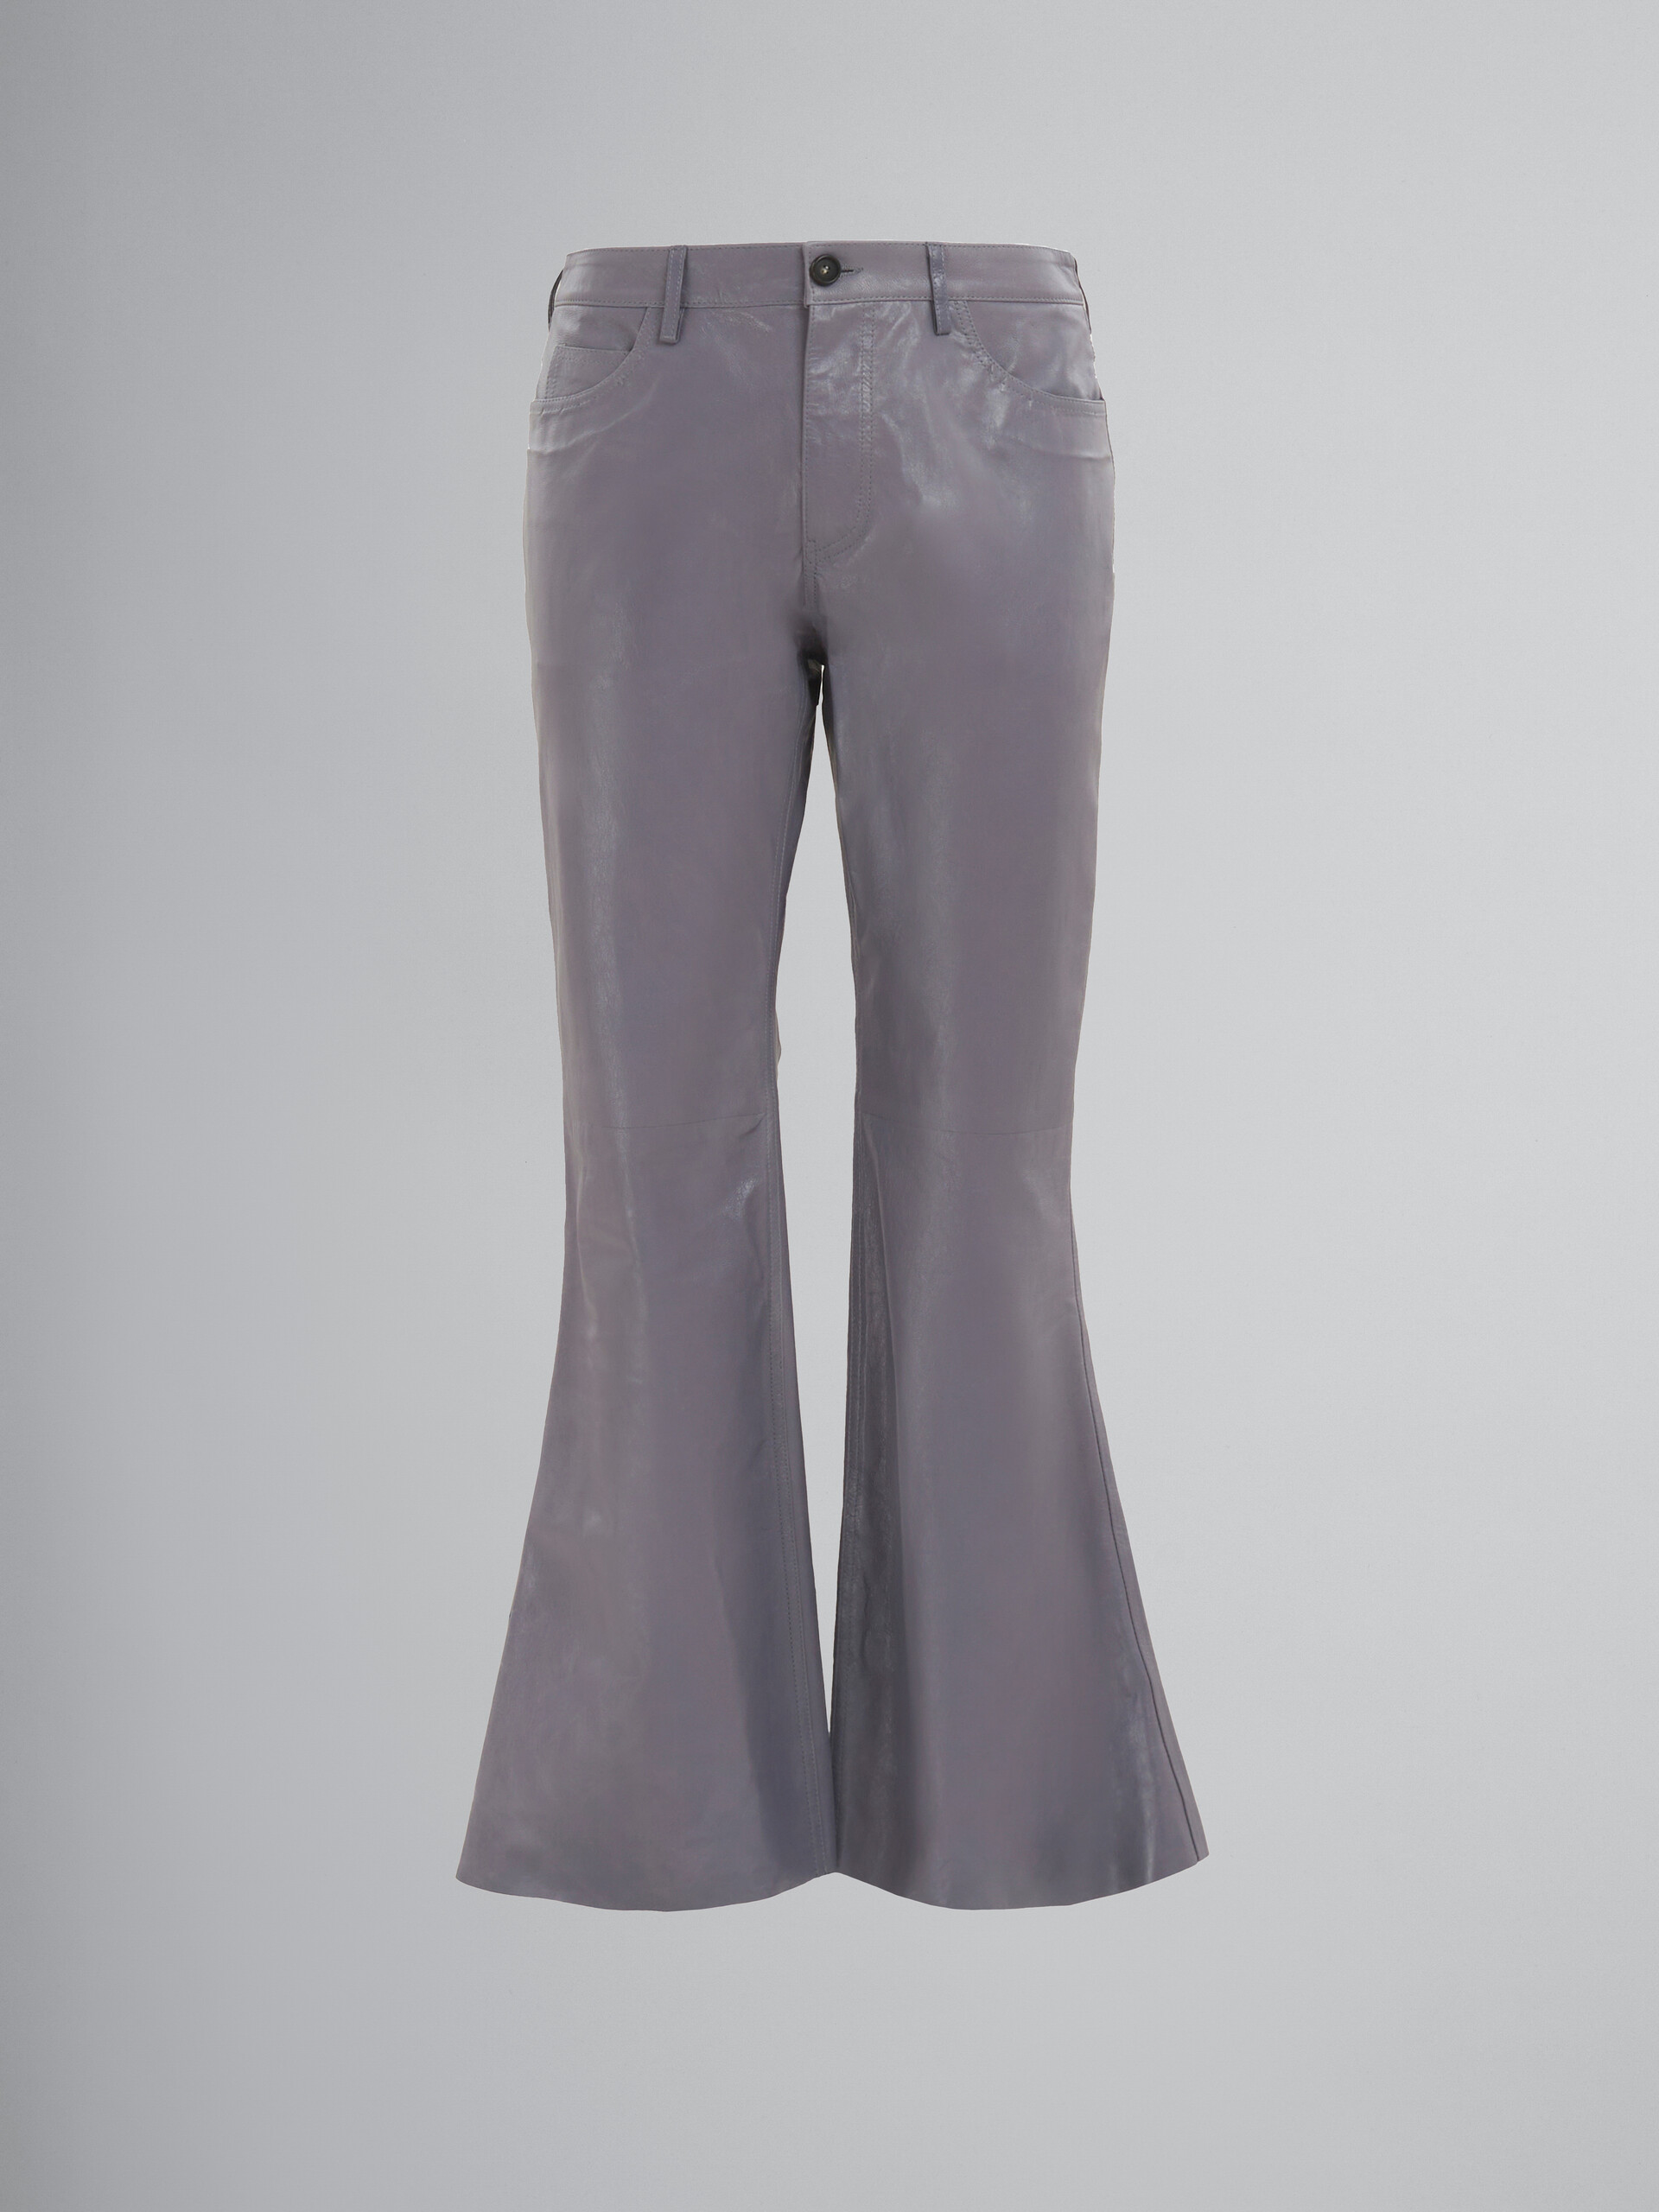 Grey shiny leather flared trousers - Pants - Image 1